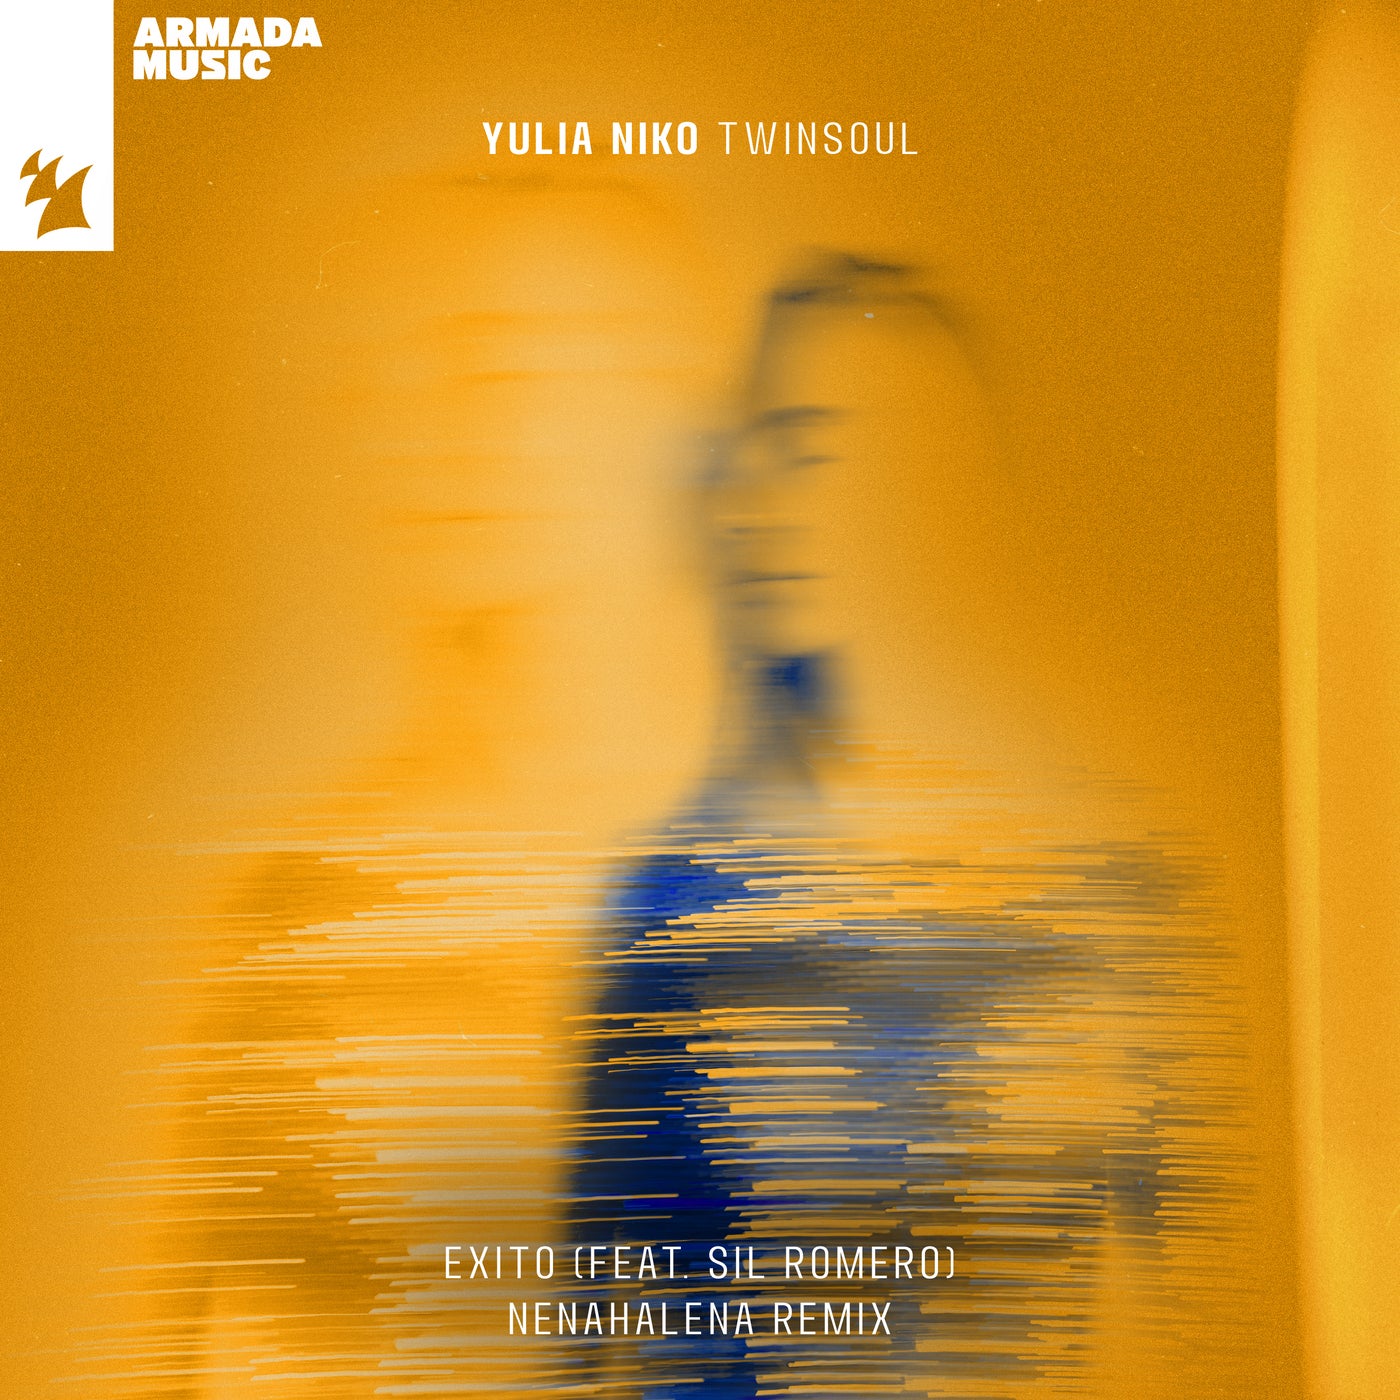 image cover: Yulia Niko, Sil Romero - Exito - NenaHalena Remix on Armada Music